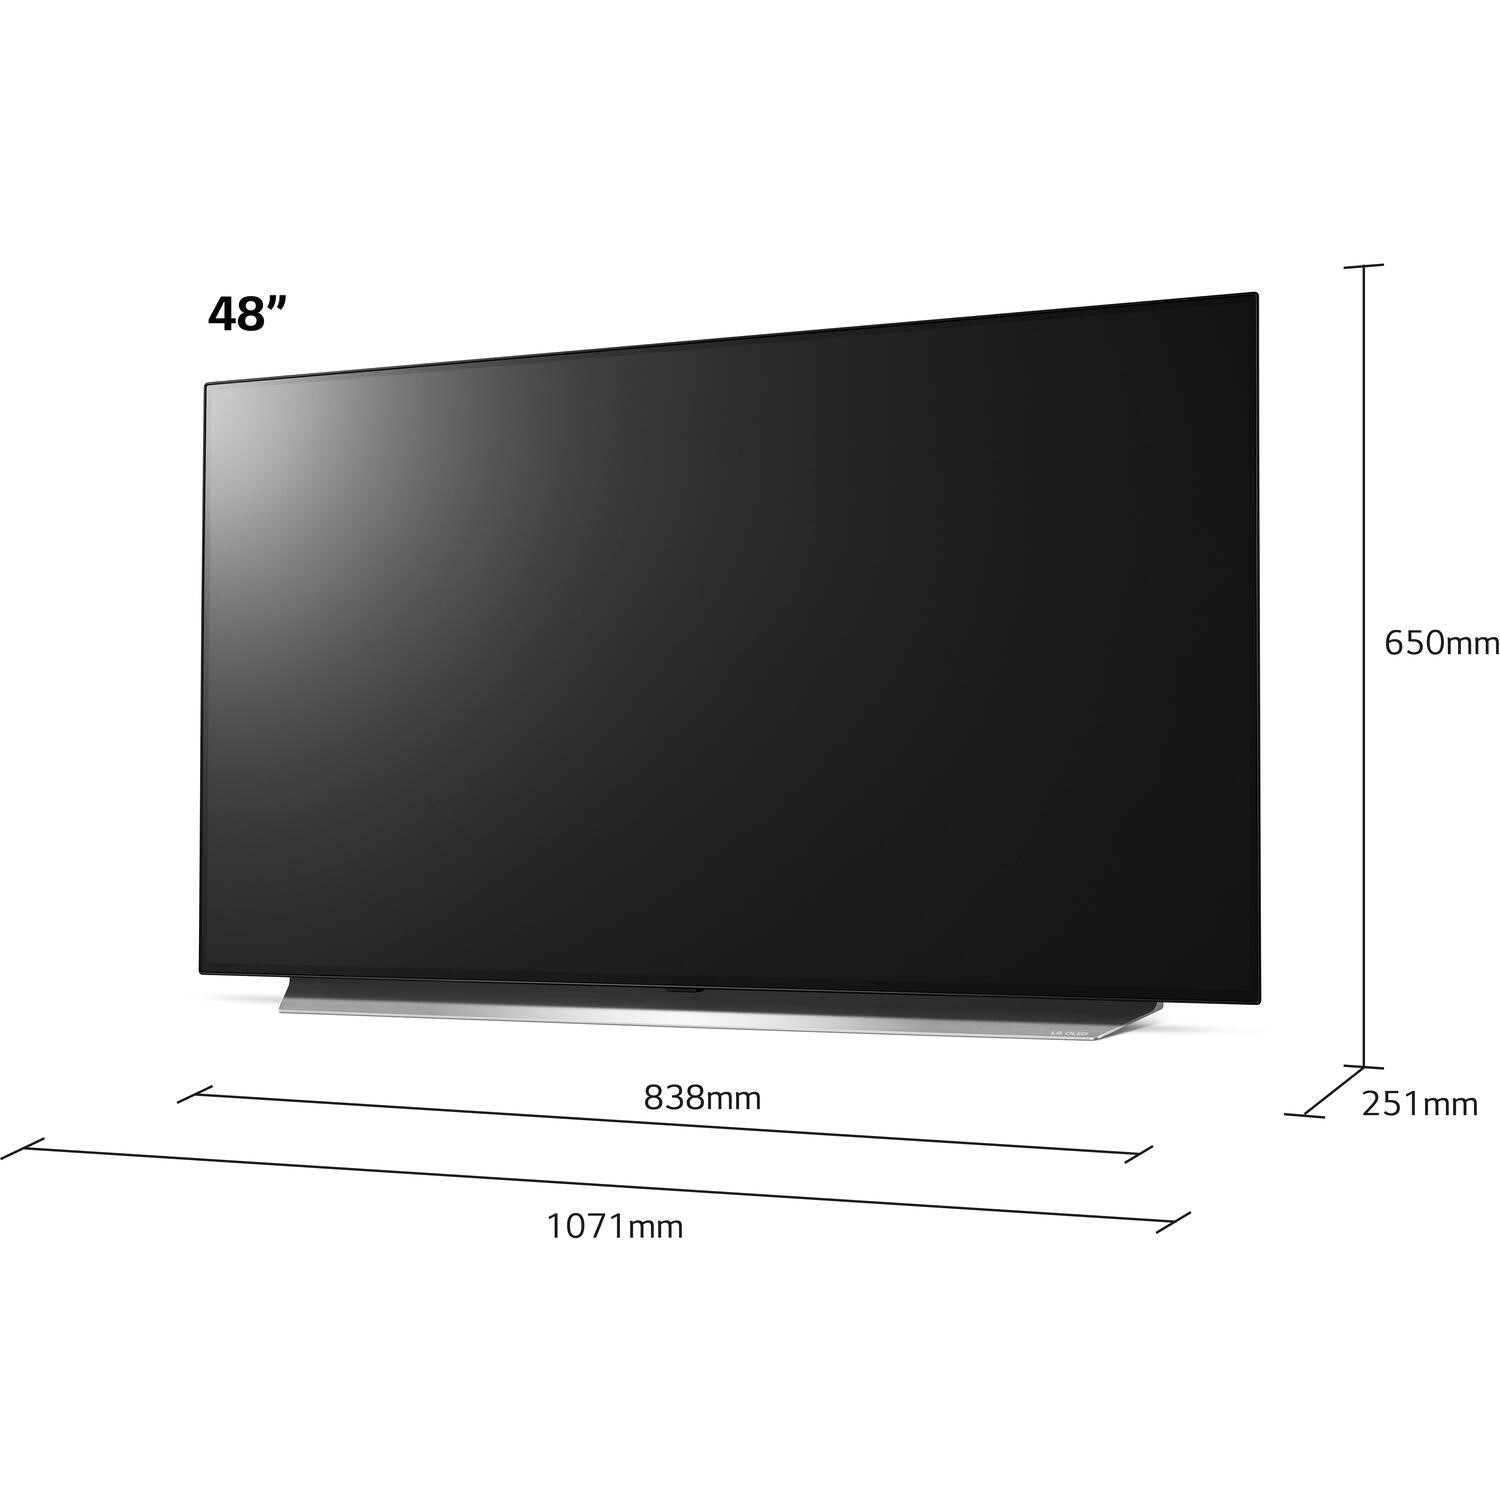 Высота телевизора диагональ 65. LG oled55bx. Телевизор LG олед 55. Телевизор 55 дюймов LG OLED. LG телевизоры OLED 65 дюймов.